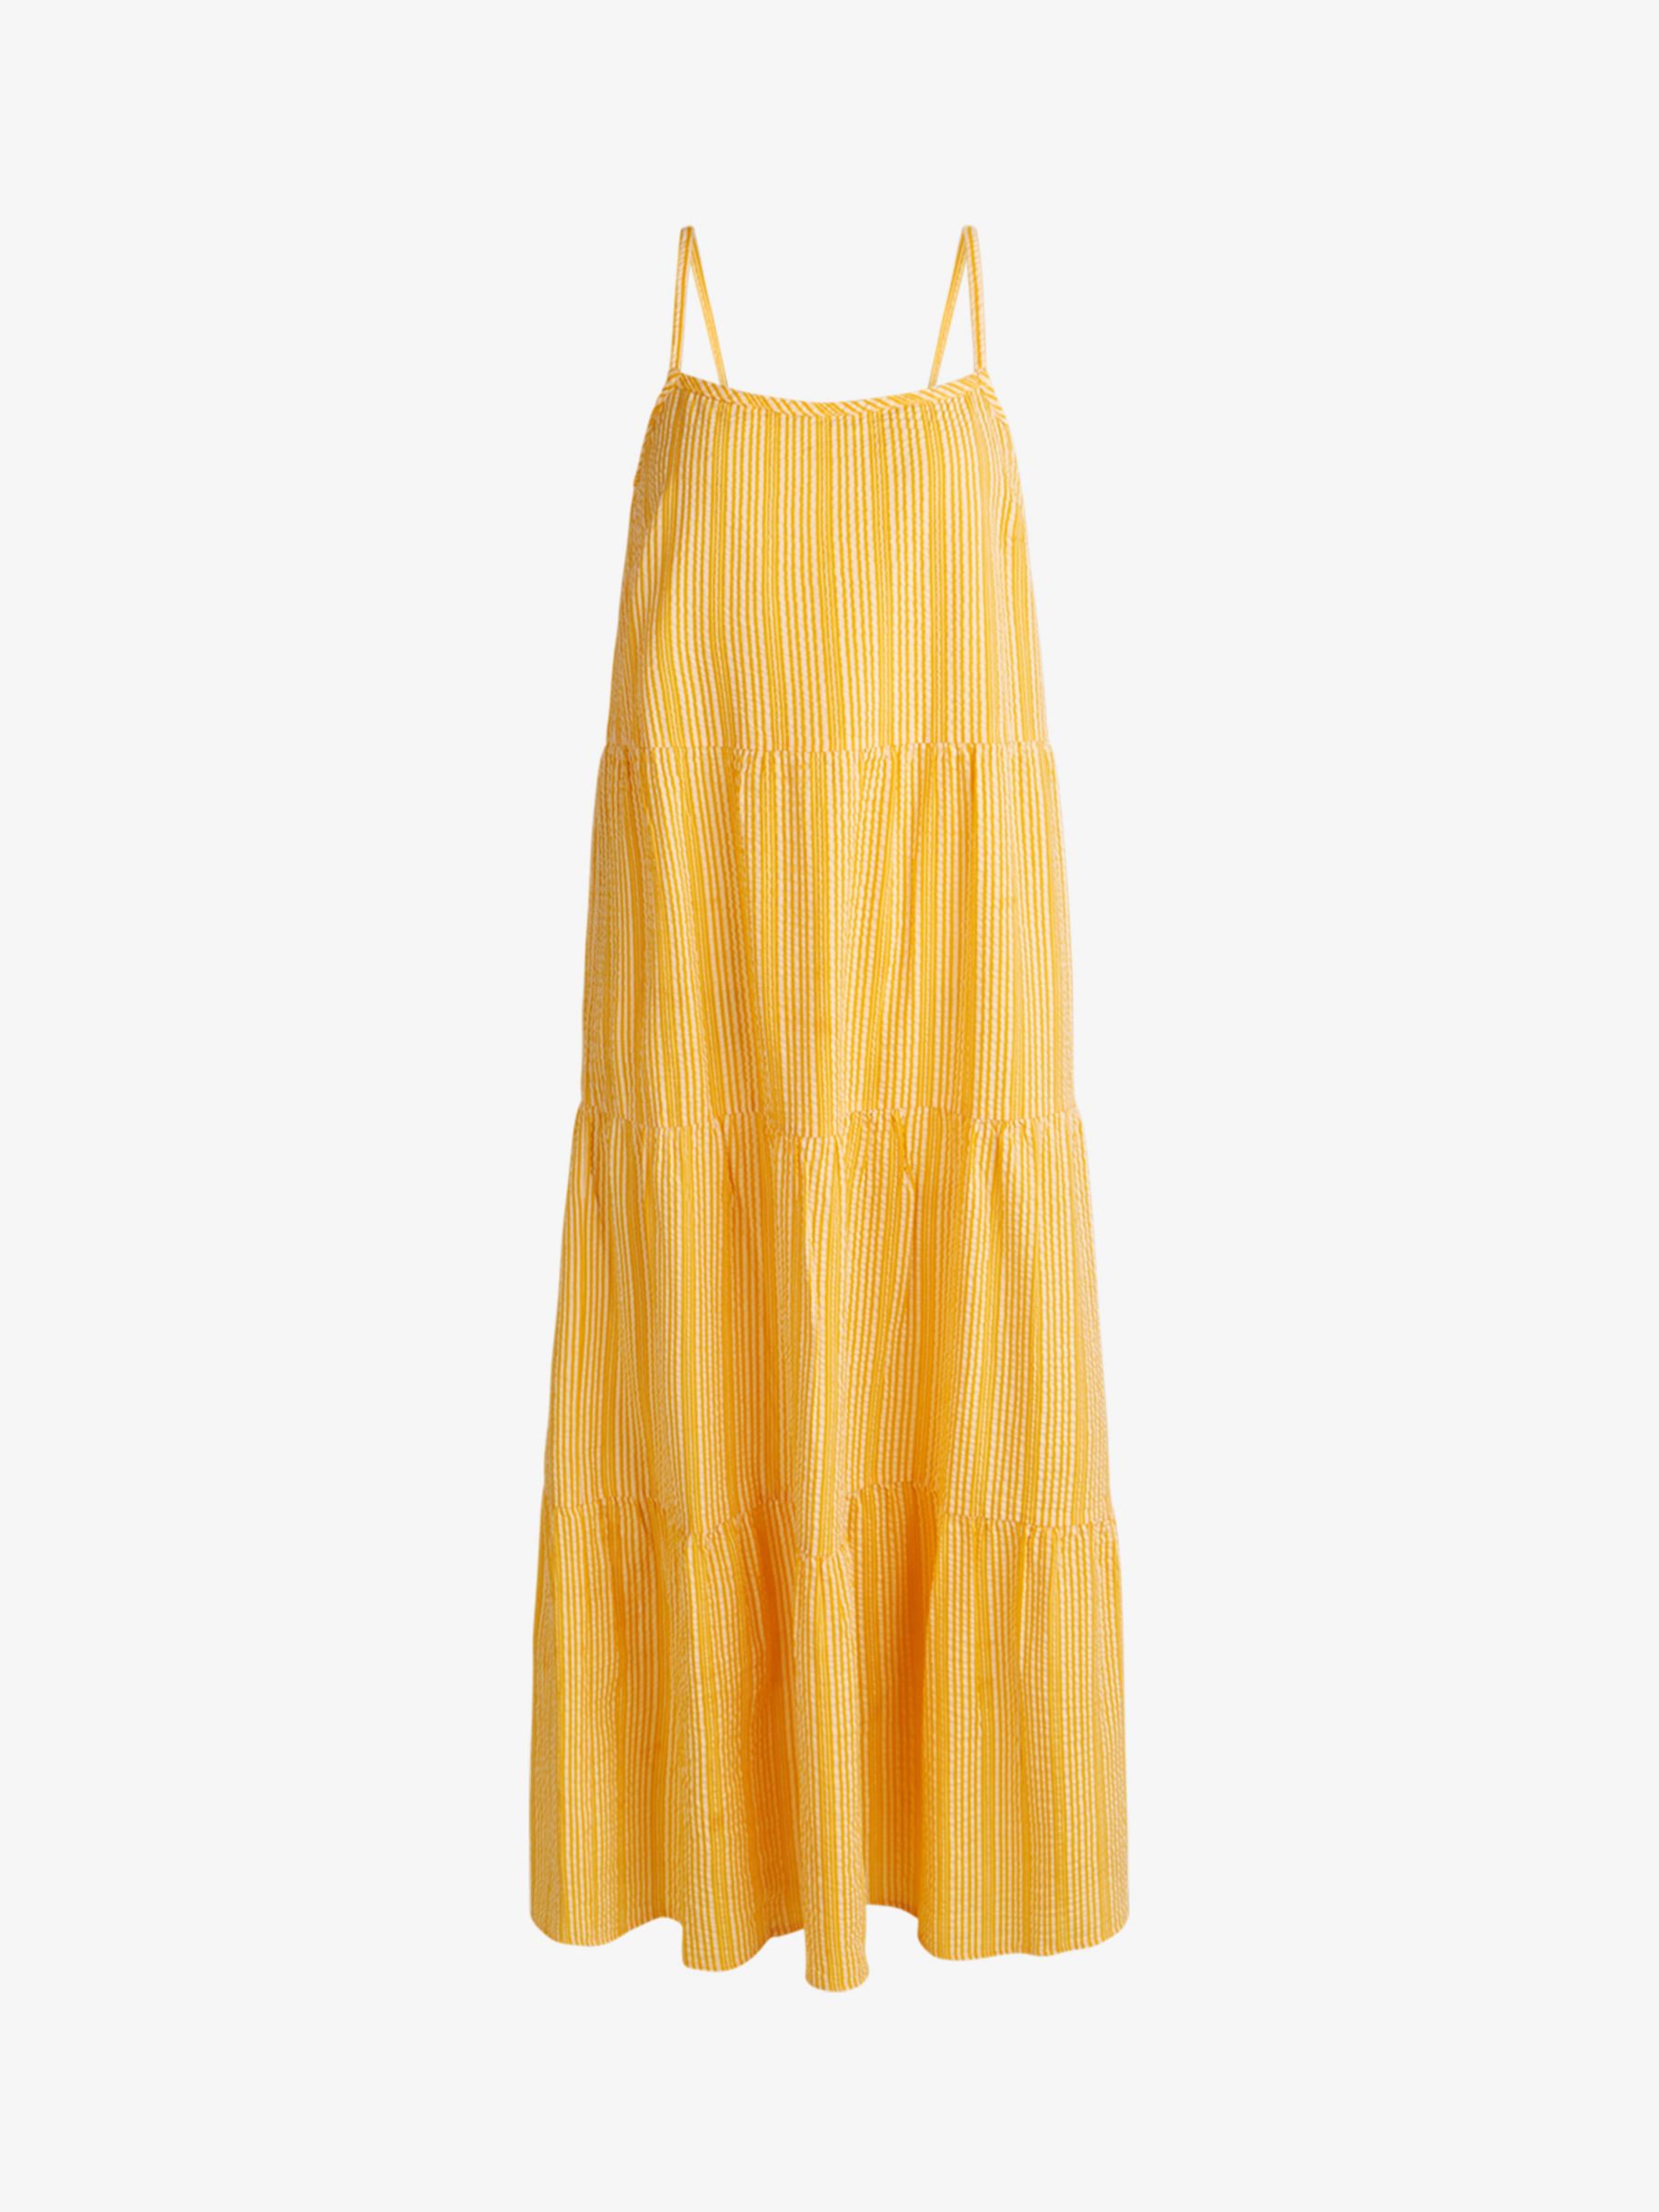 Noa Noa Mire Sleeveless Maxi Dress, Art Yellow at John Lewis & Partners